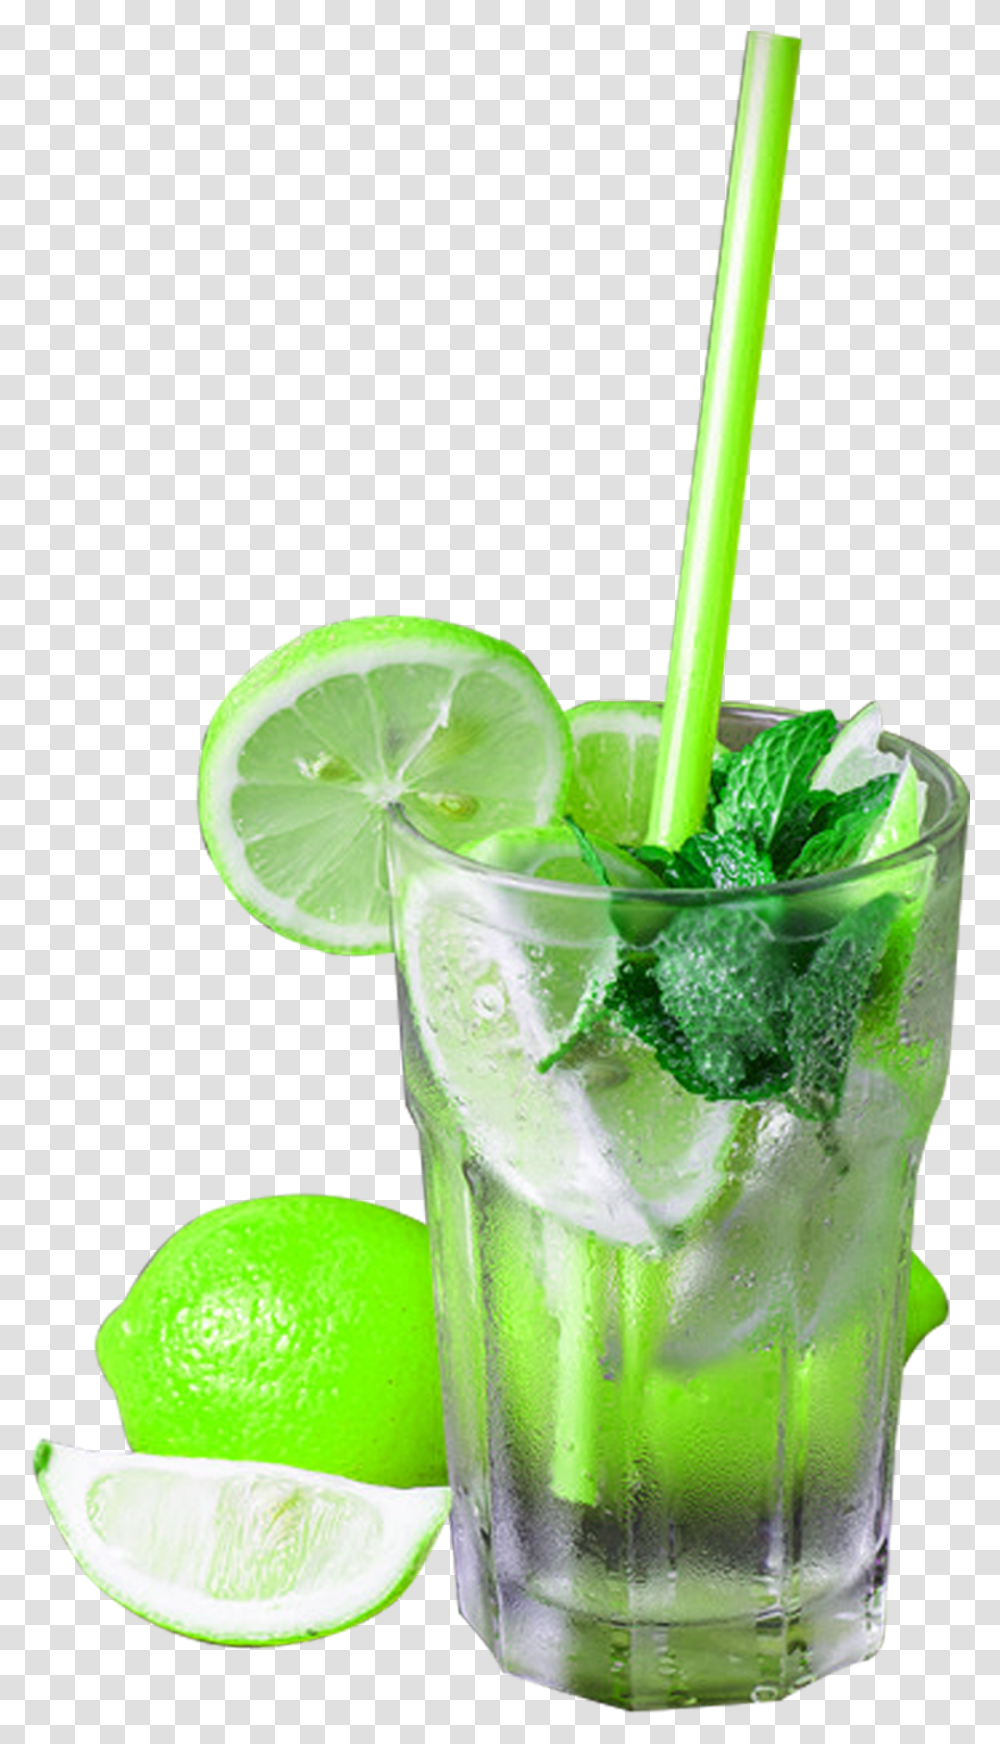 Lemon Water Image Free Download Searchpng Drinks Glass Lemon, Cocktail, Alcohol, Beverage, Lime Transparent Png